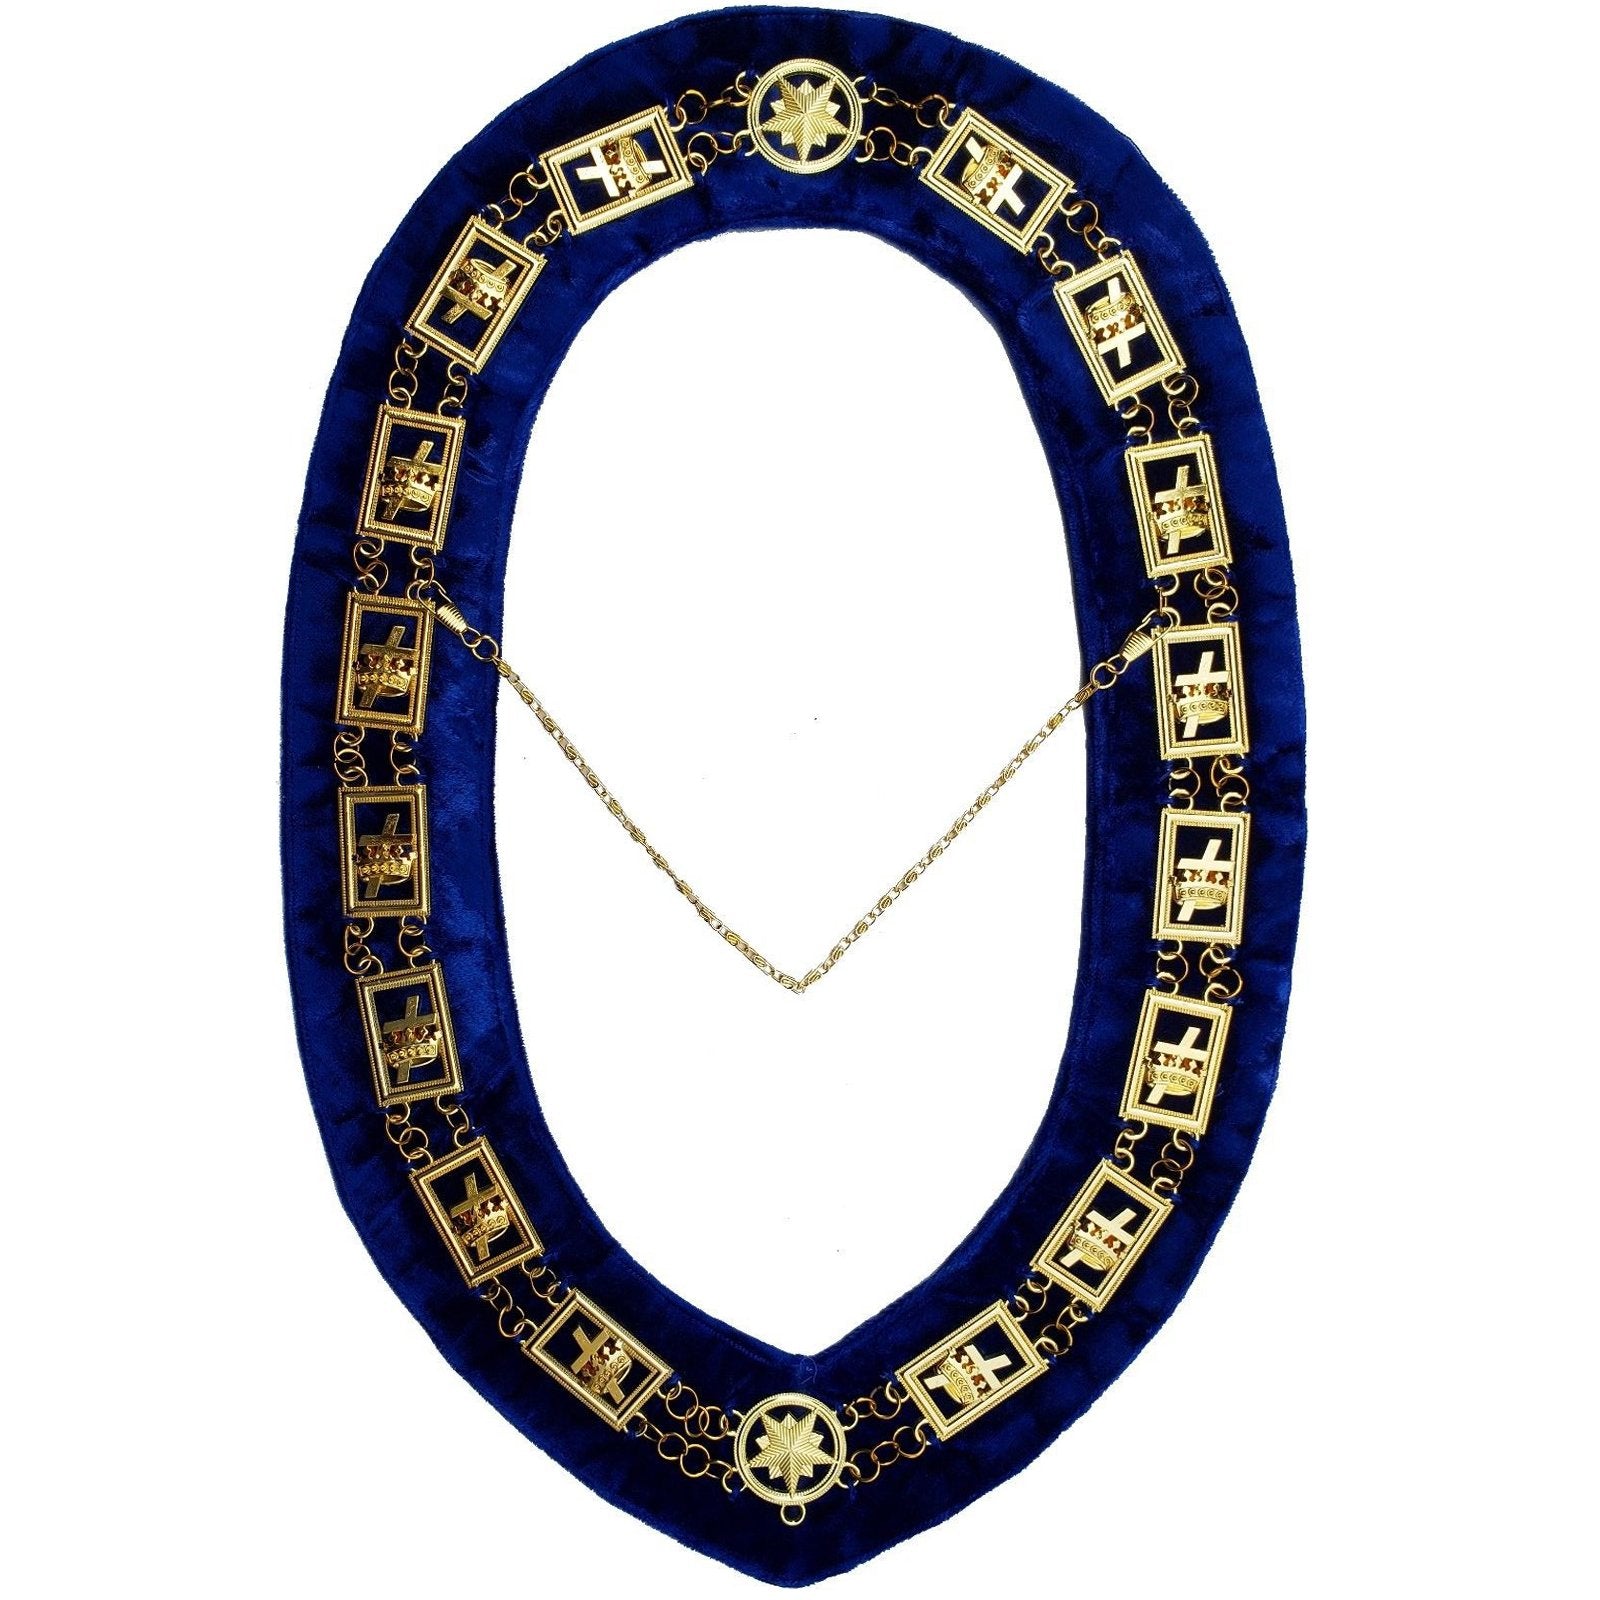 Knights Templar Commandery Chain Collar - Gold Plated on Blue Velvet - Bricks Masons